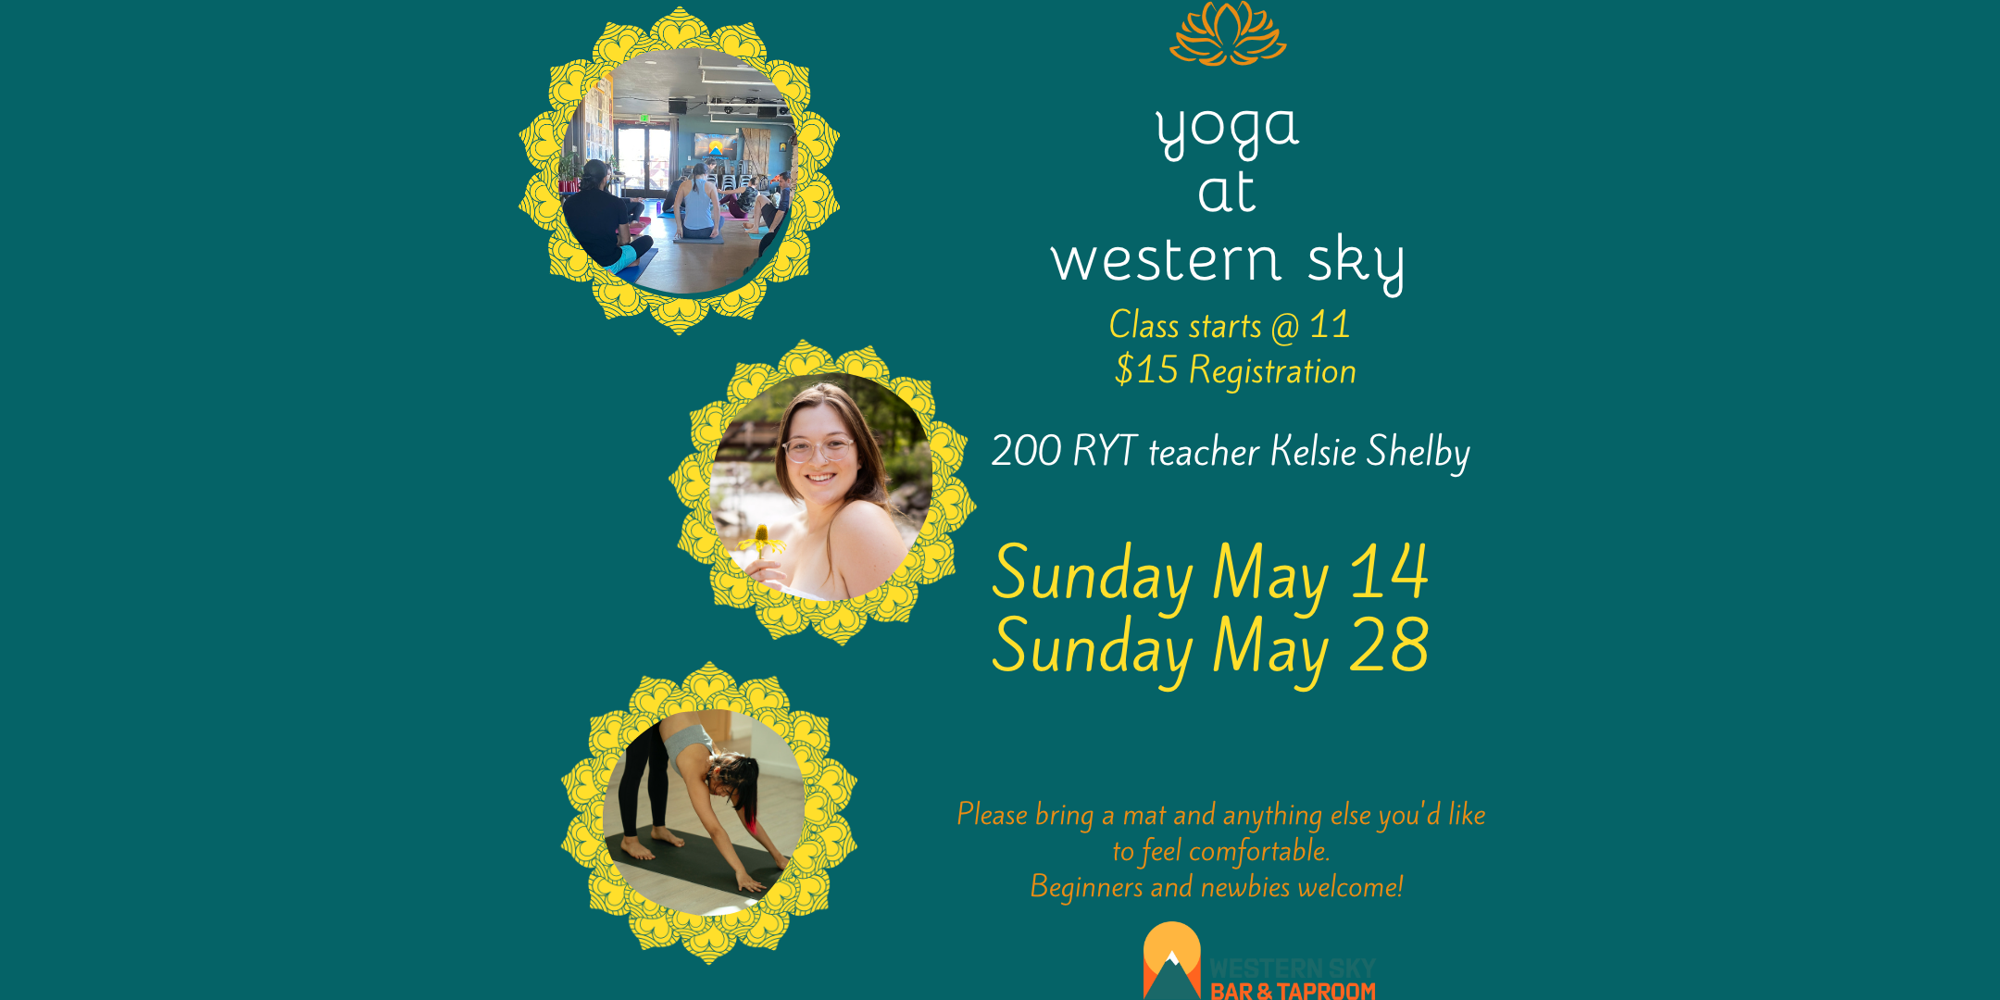 Yoga at Western Sky promotional image